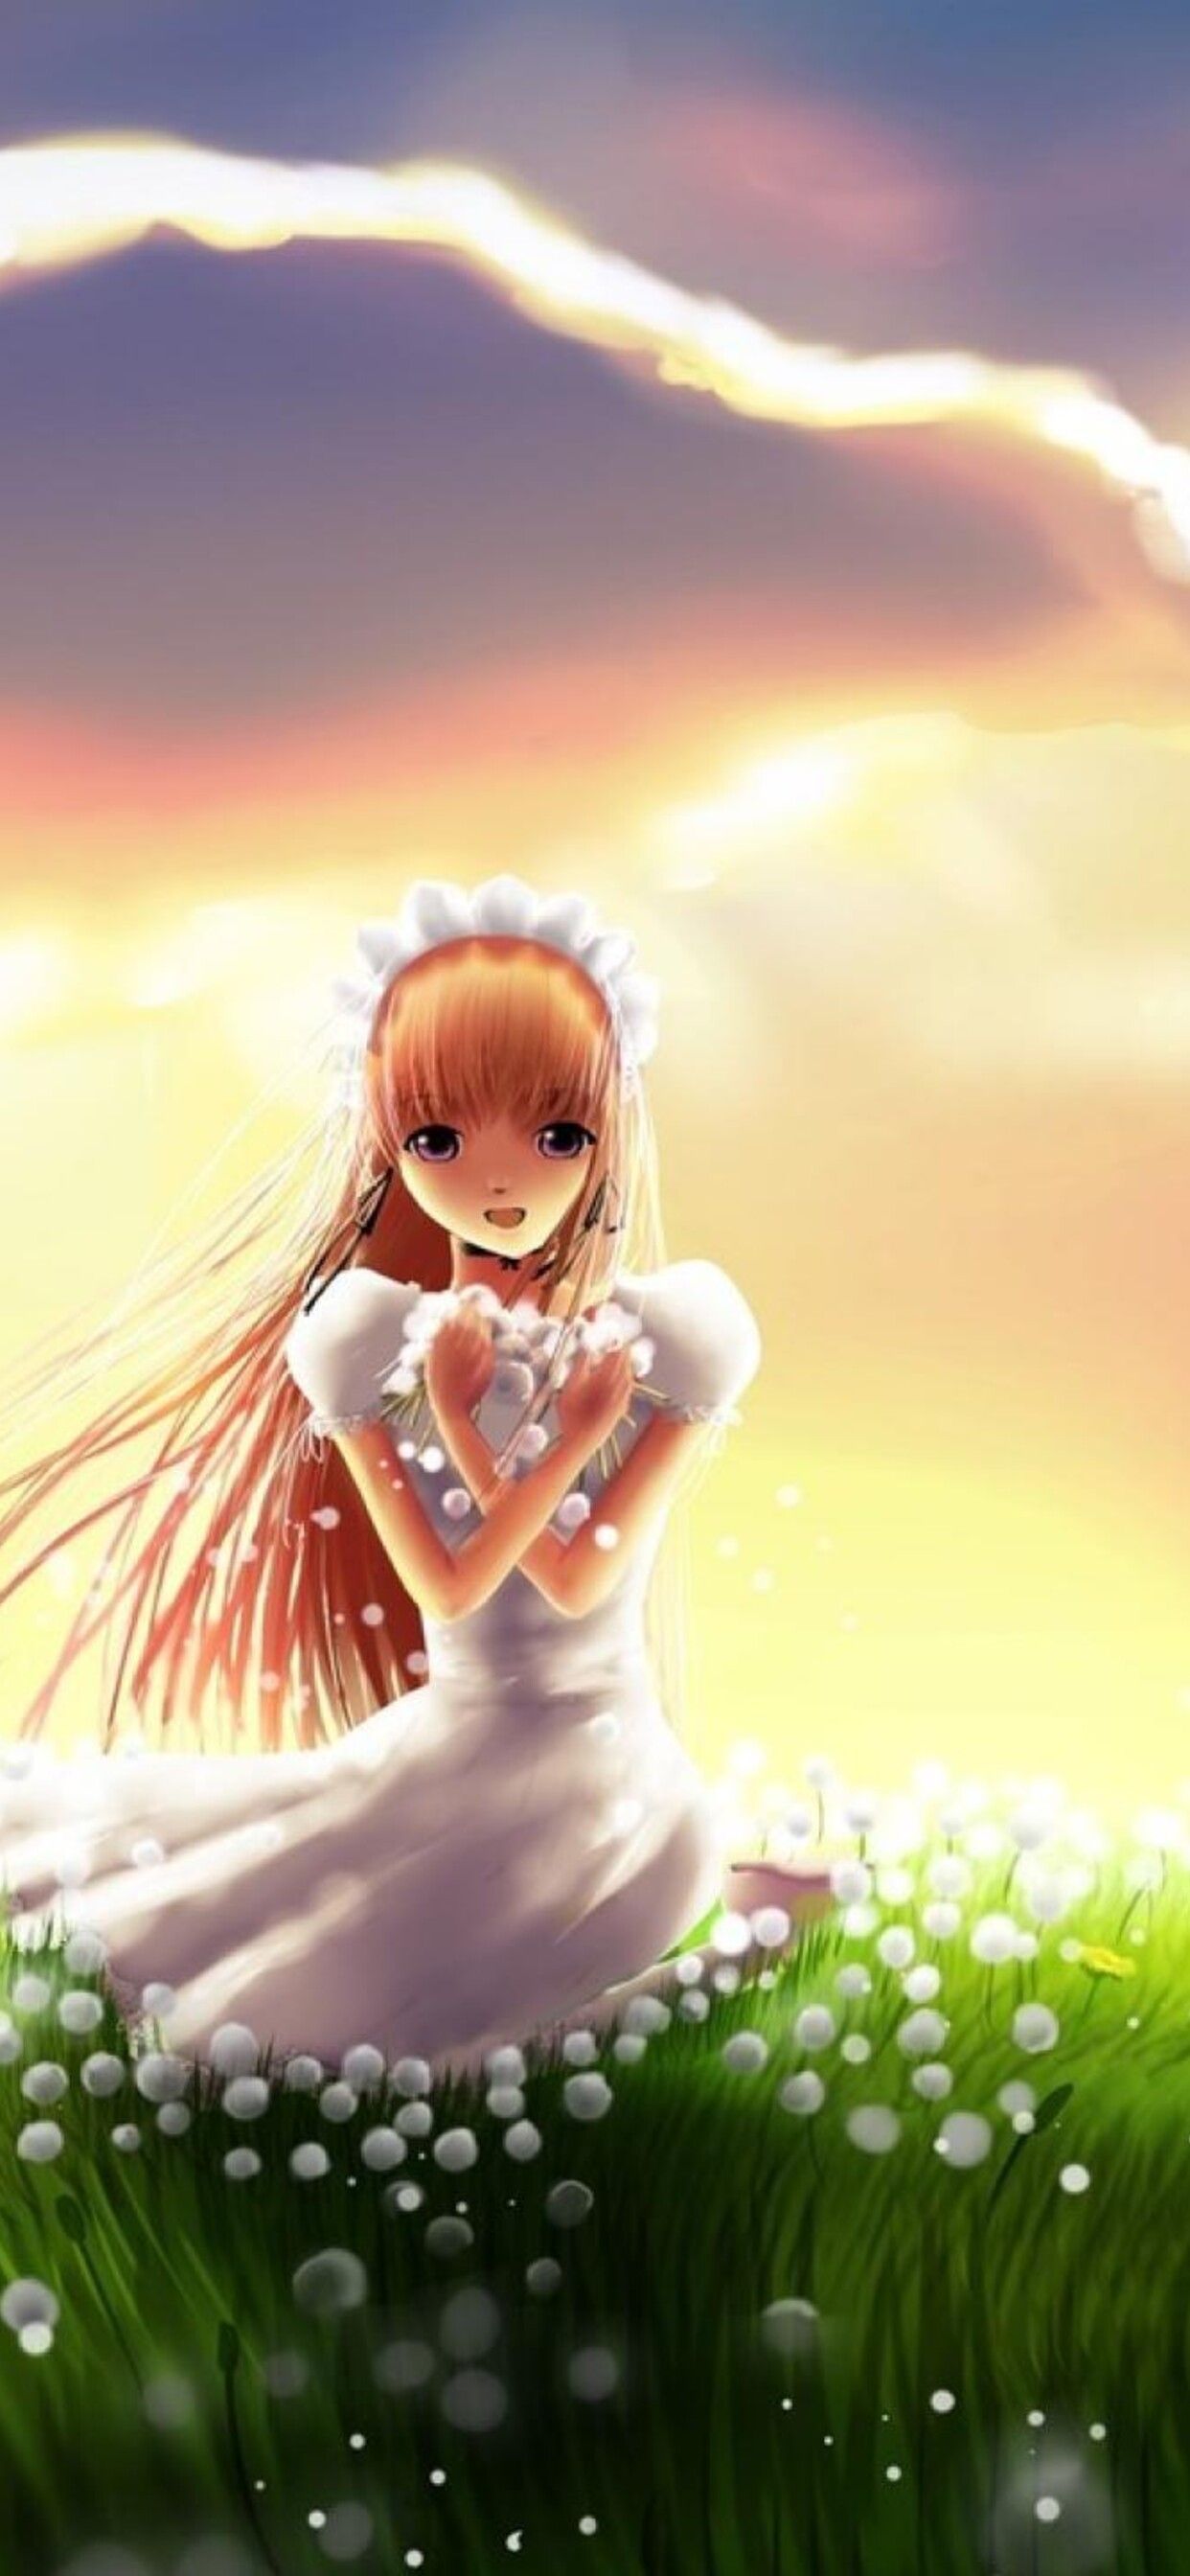 Anime bride on a field fullsuperiorwallpaper.com